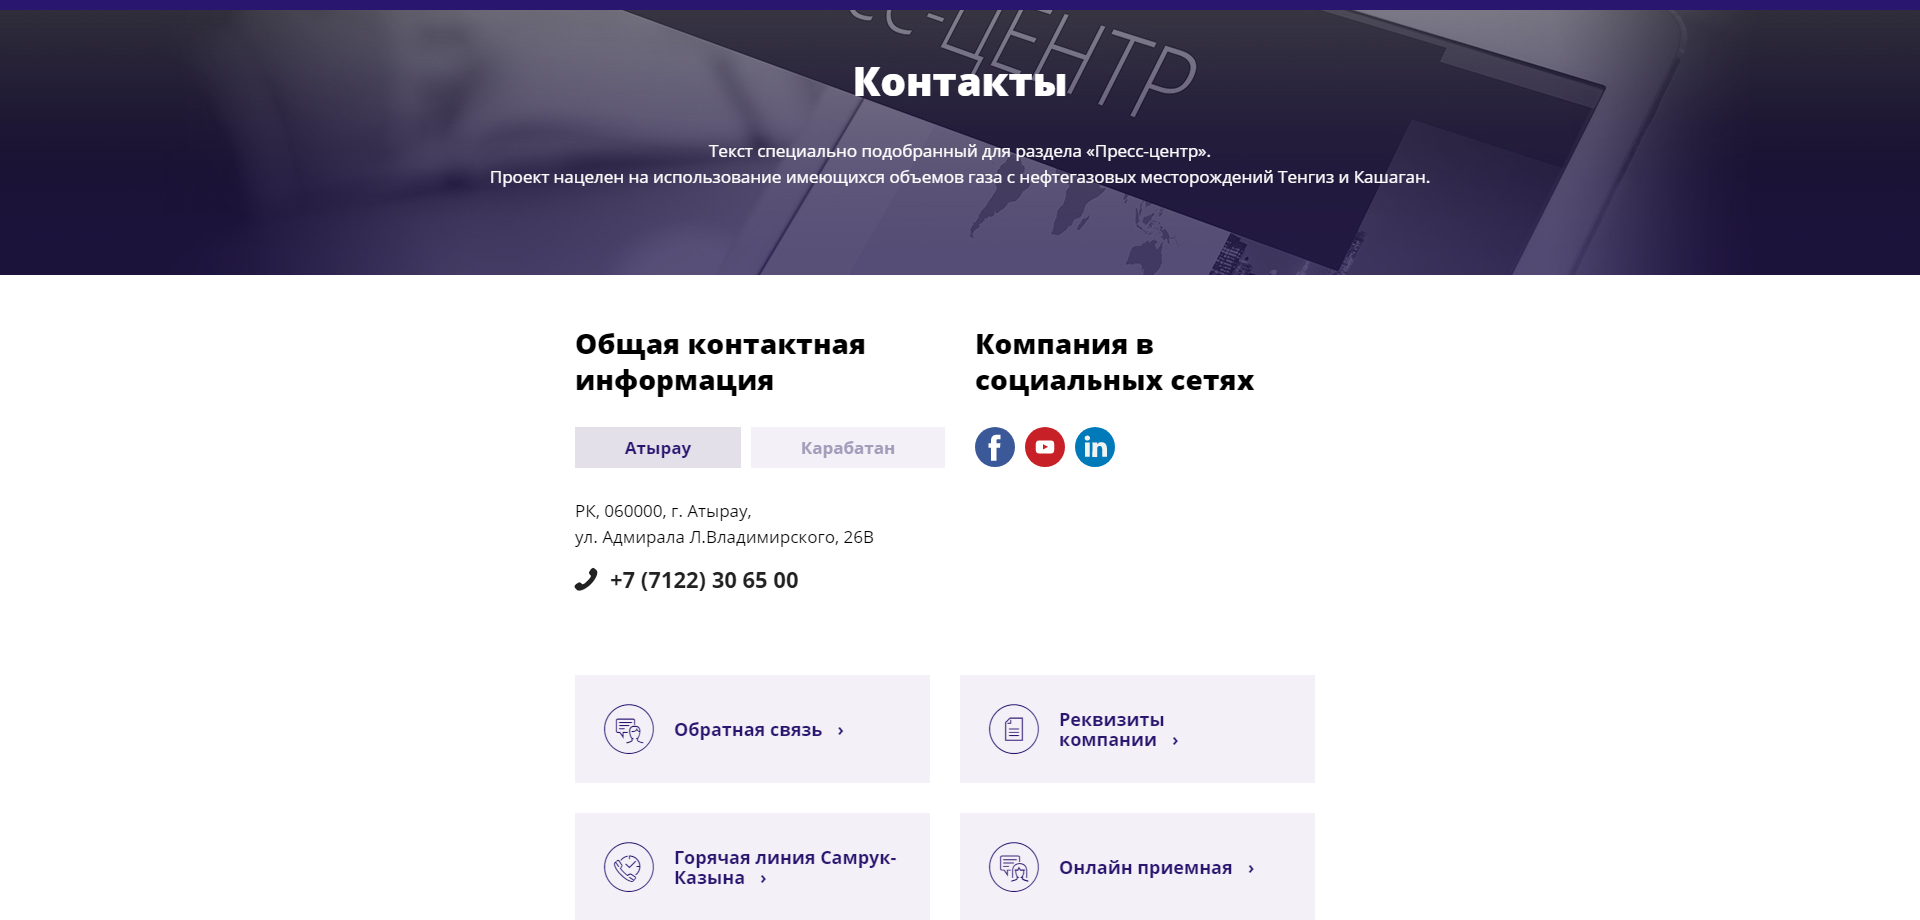 сайт компании kazakhstan petrochemical industries inc.